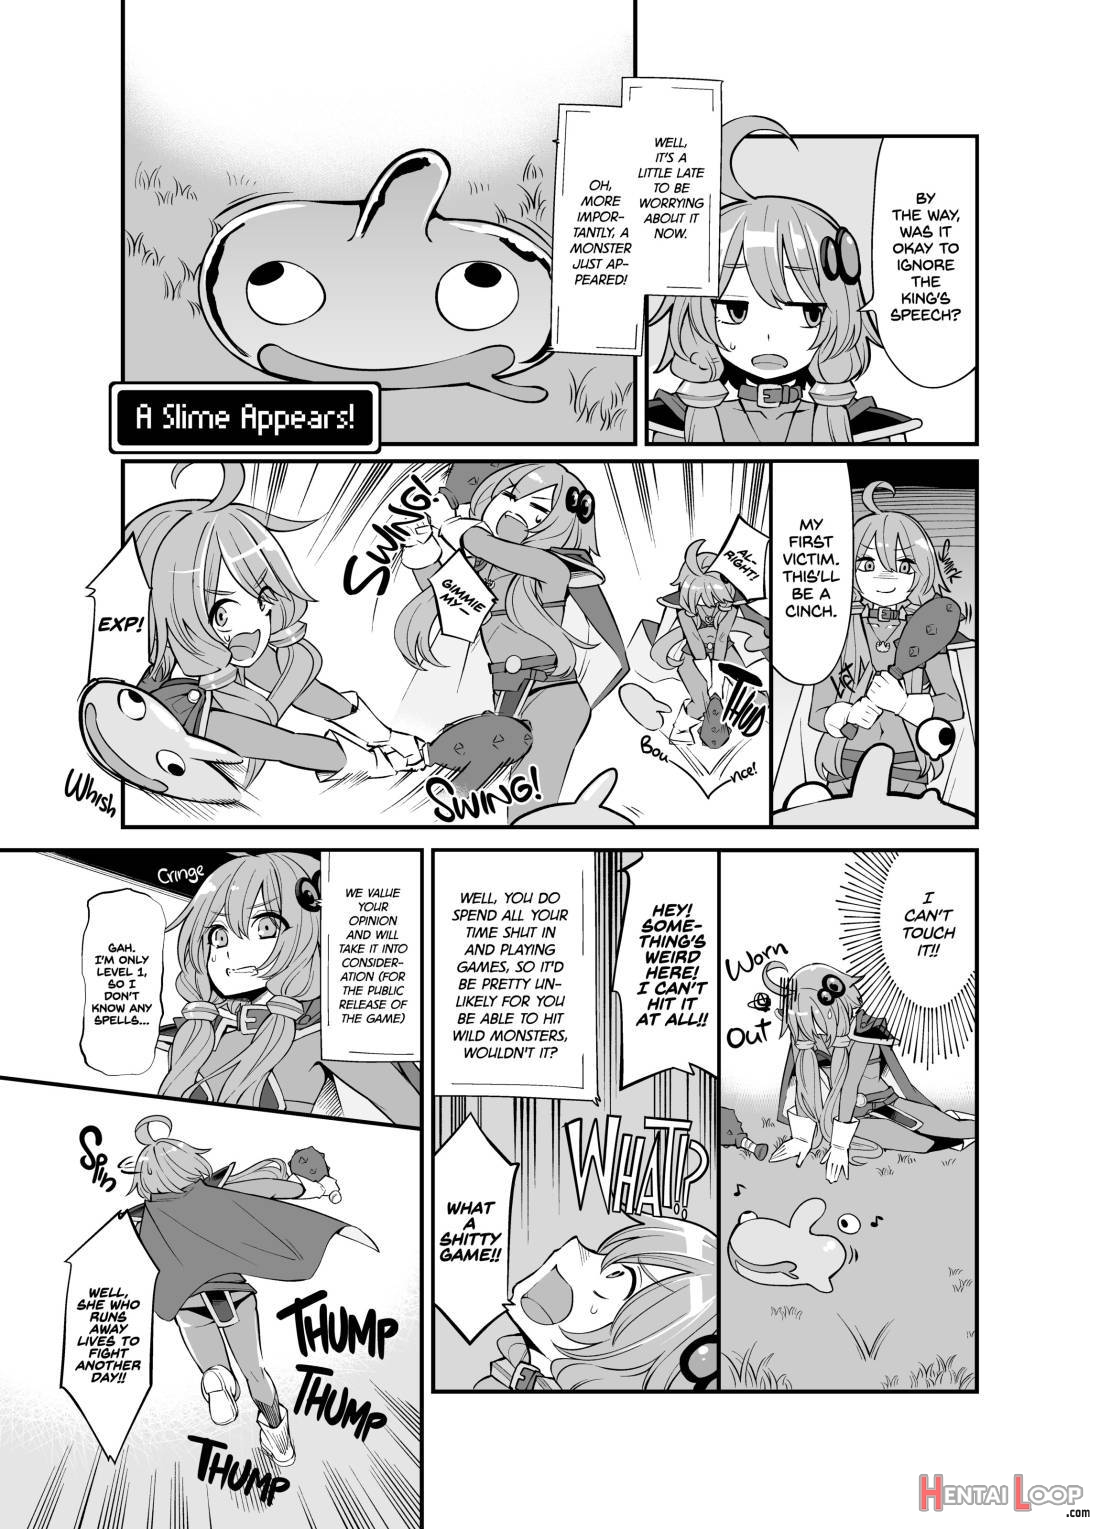 Yuzuki Yukari’s Lewd Dragon Quest Adventure page 4